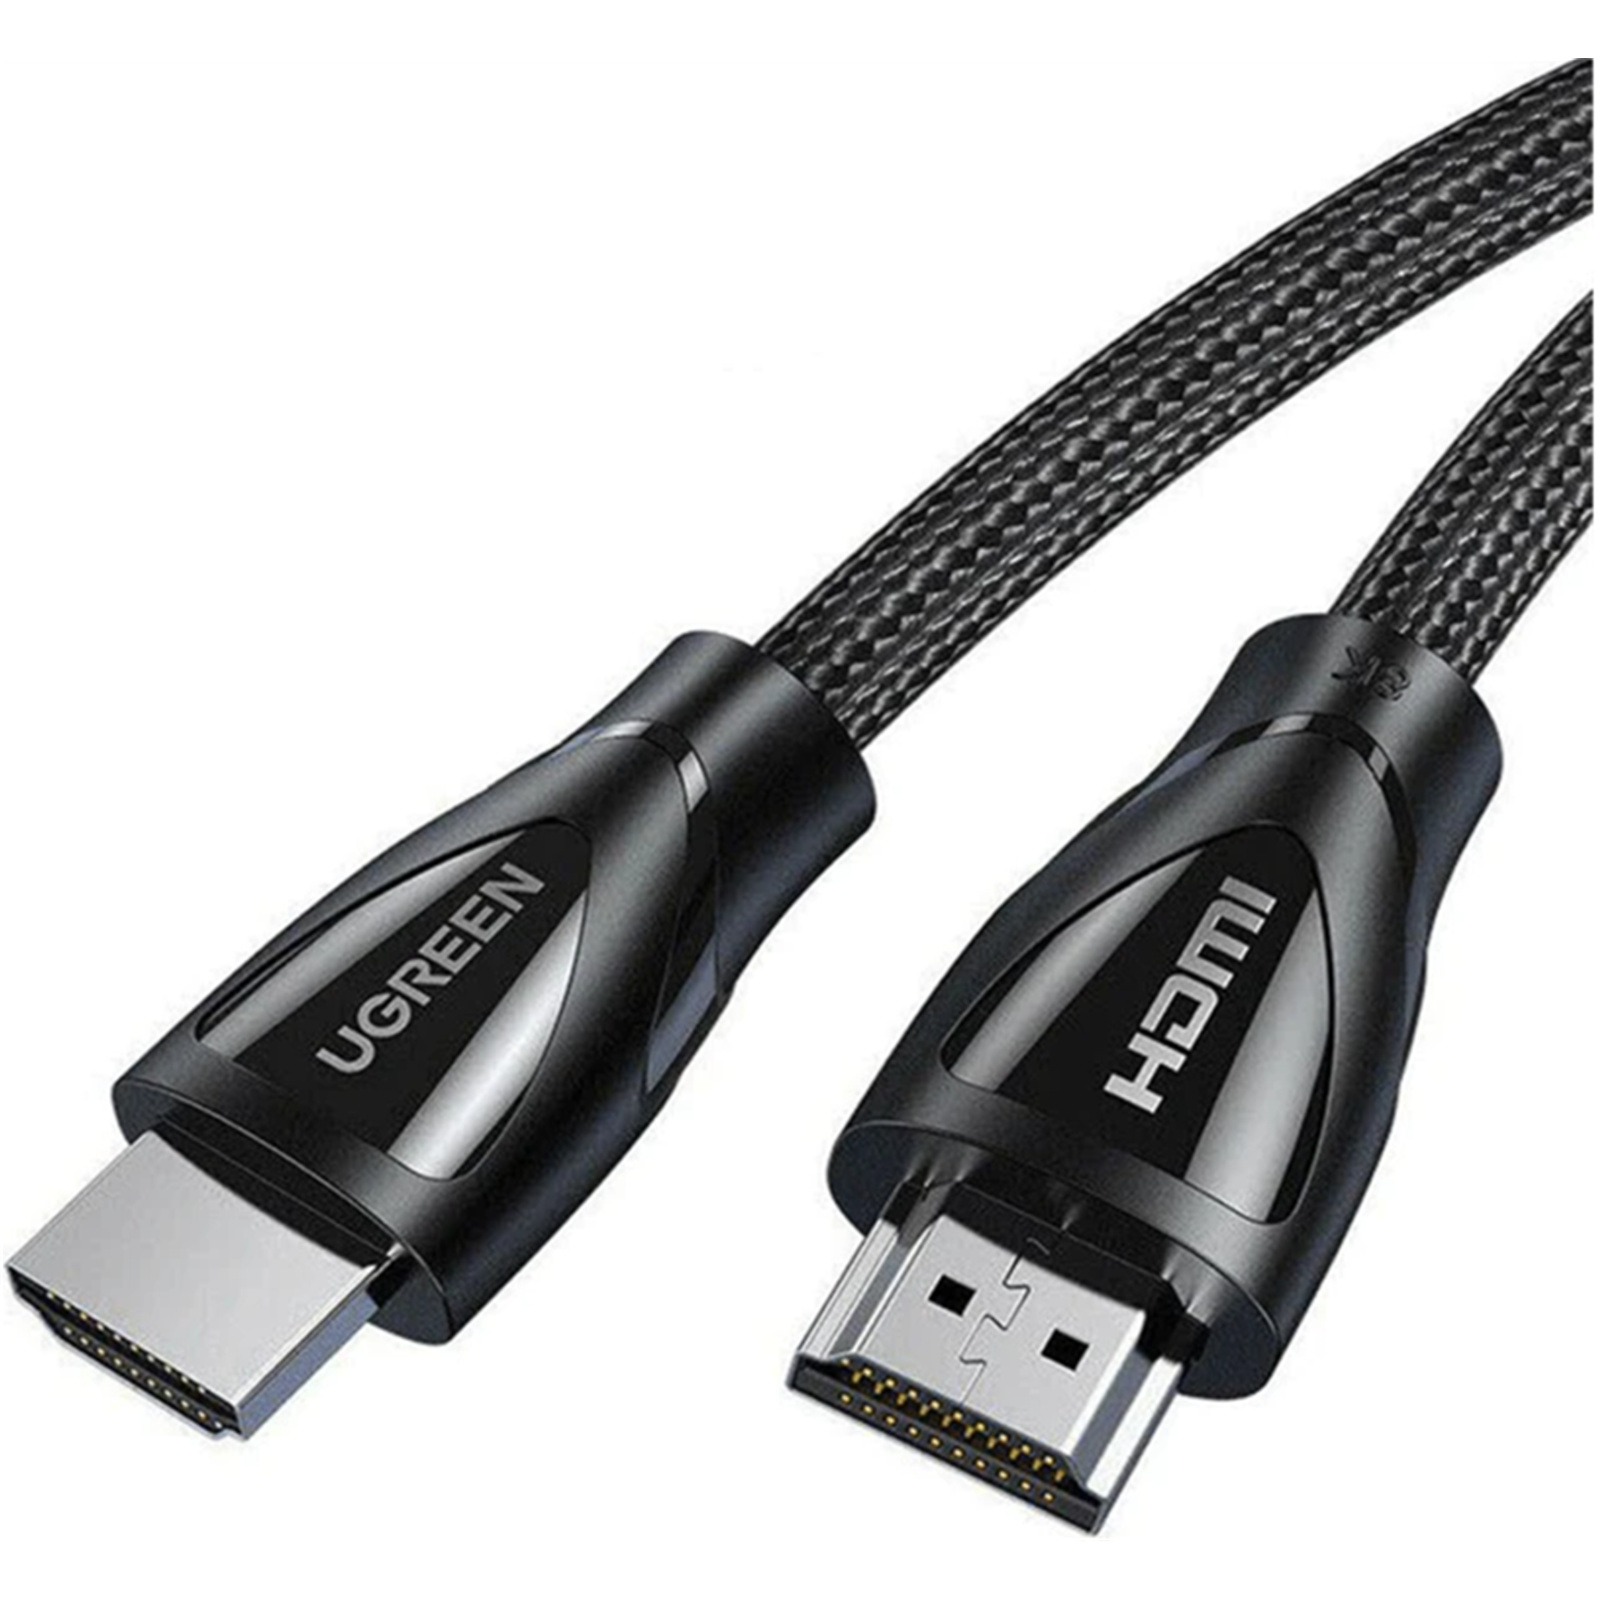 UGREEN HD140 HDMI 2.1, 8K 60Hz, 3m Cable (Black) – UGREEN-NZL